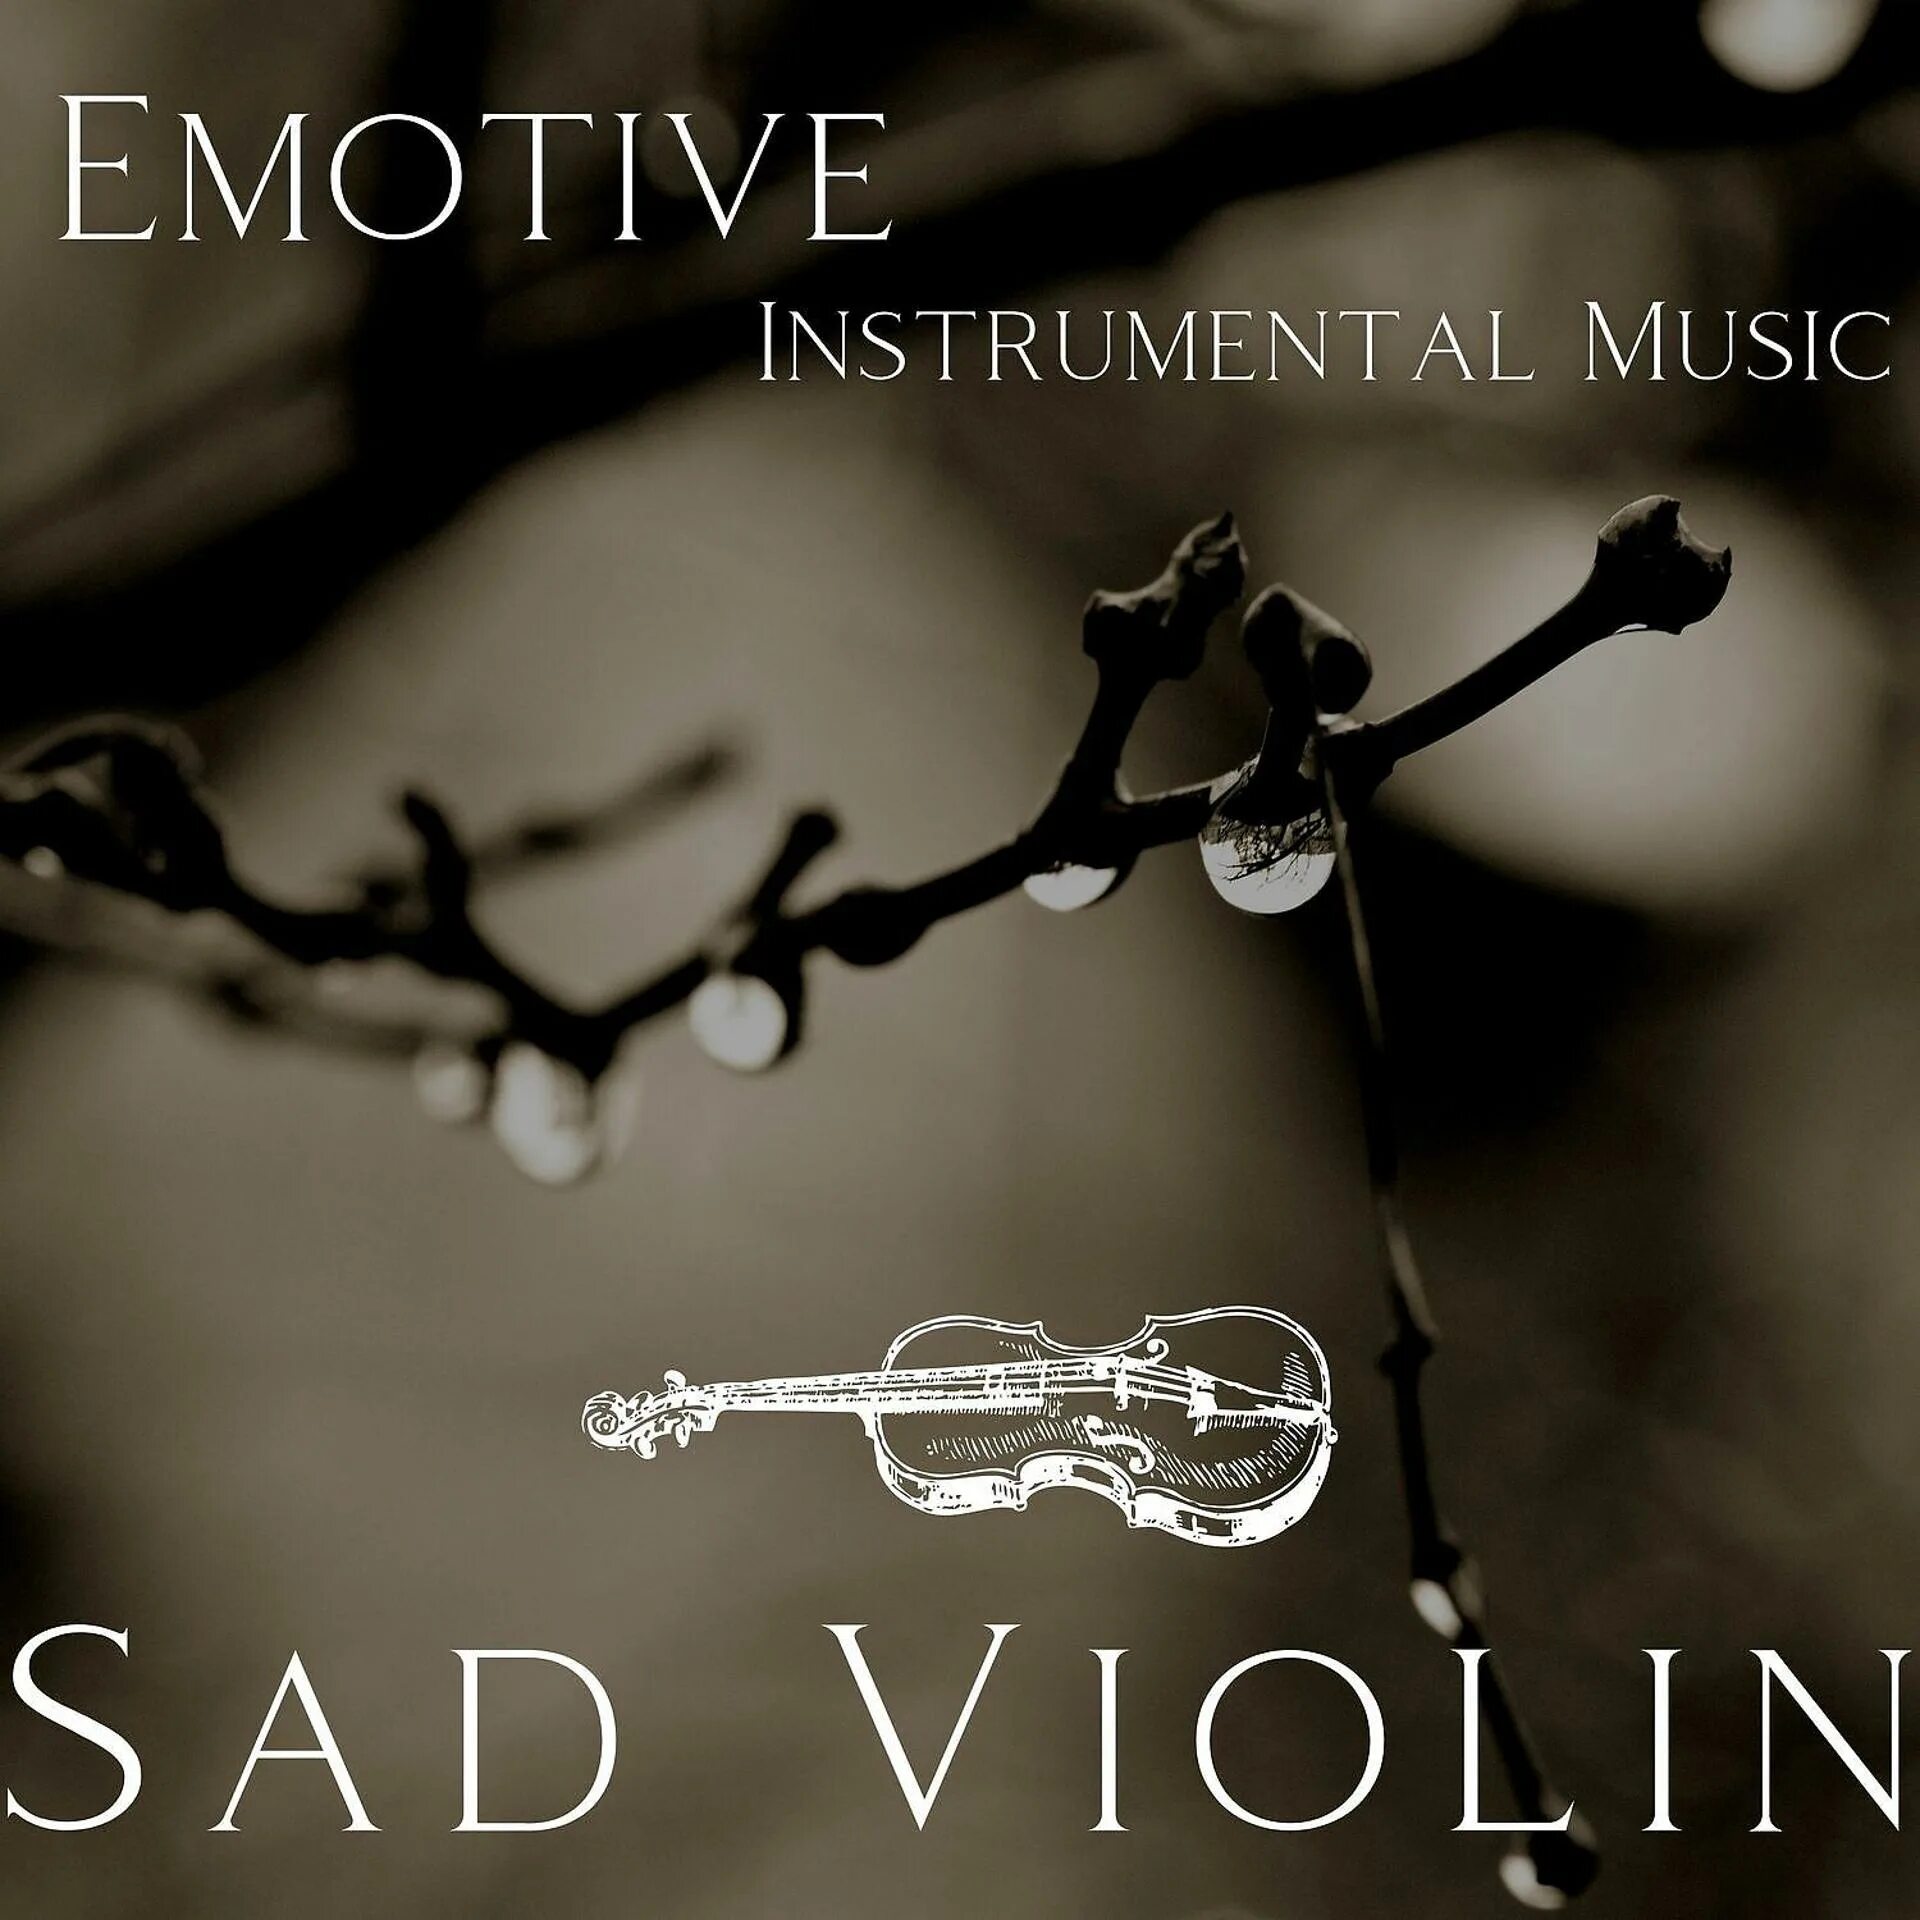 Sad violin meme. Sad Violin Мем. Музыка Sad. Sad Song Violin. Sad Violin (the meme one).